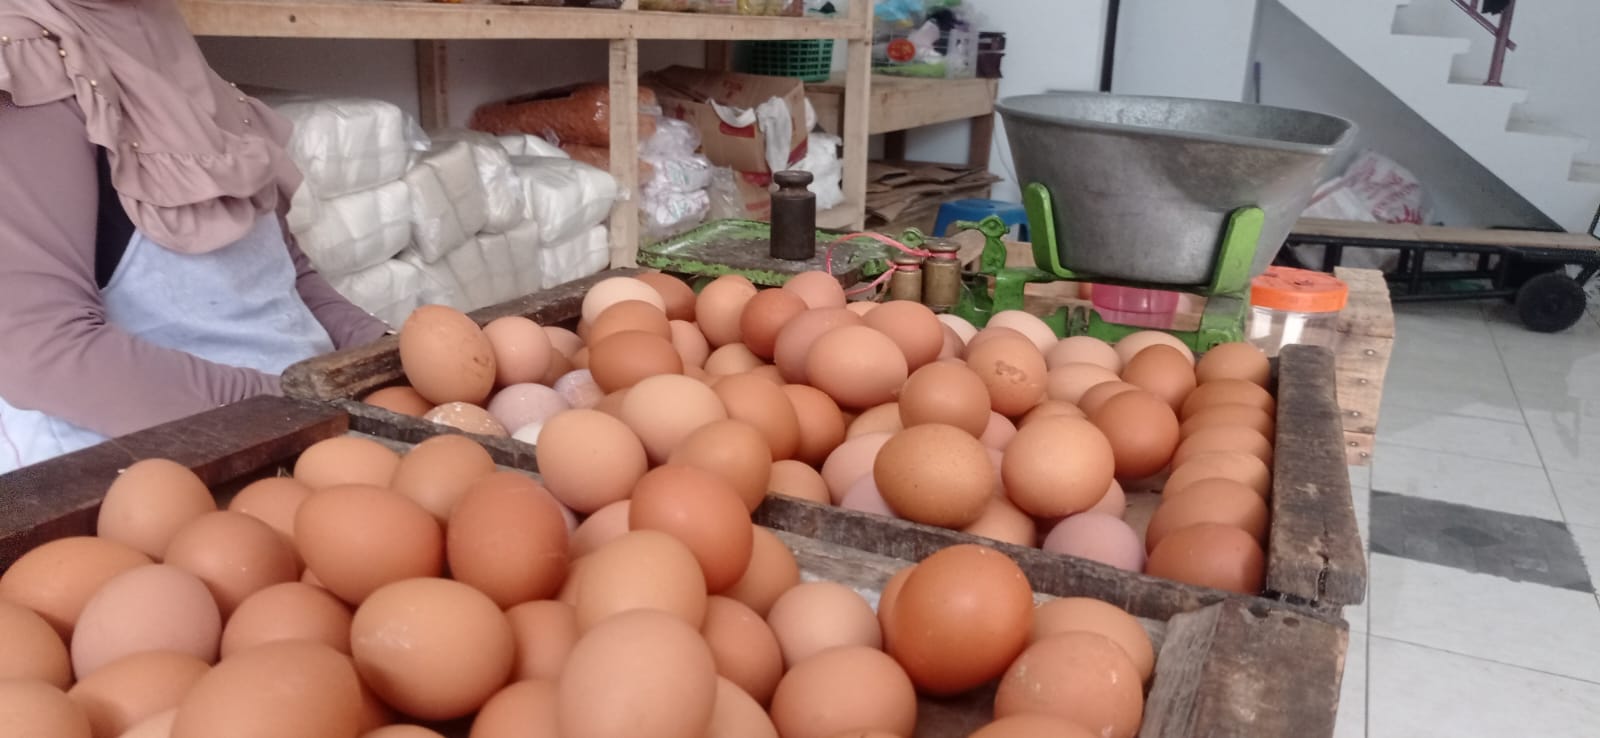 Harga Telur Ras di Wonosobo Masuk Kategori Wajar